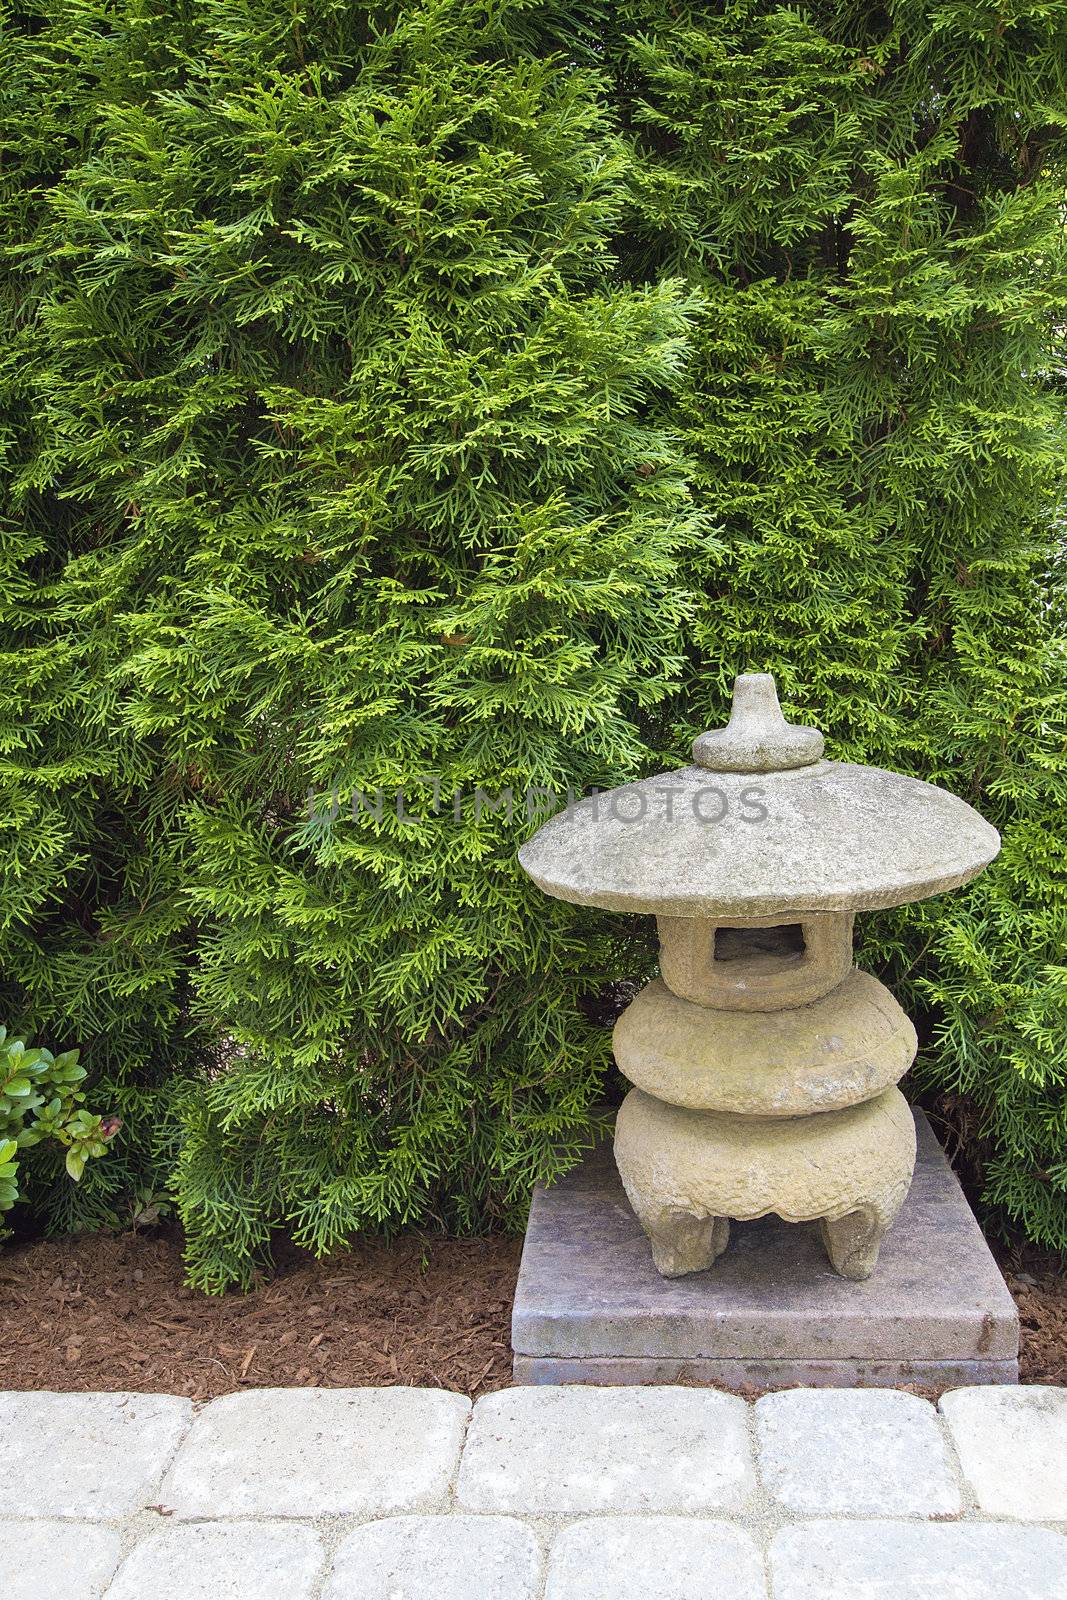 Japanese Stone Pagoda by jpldesigns